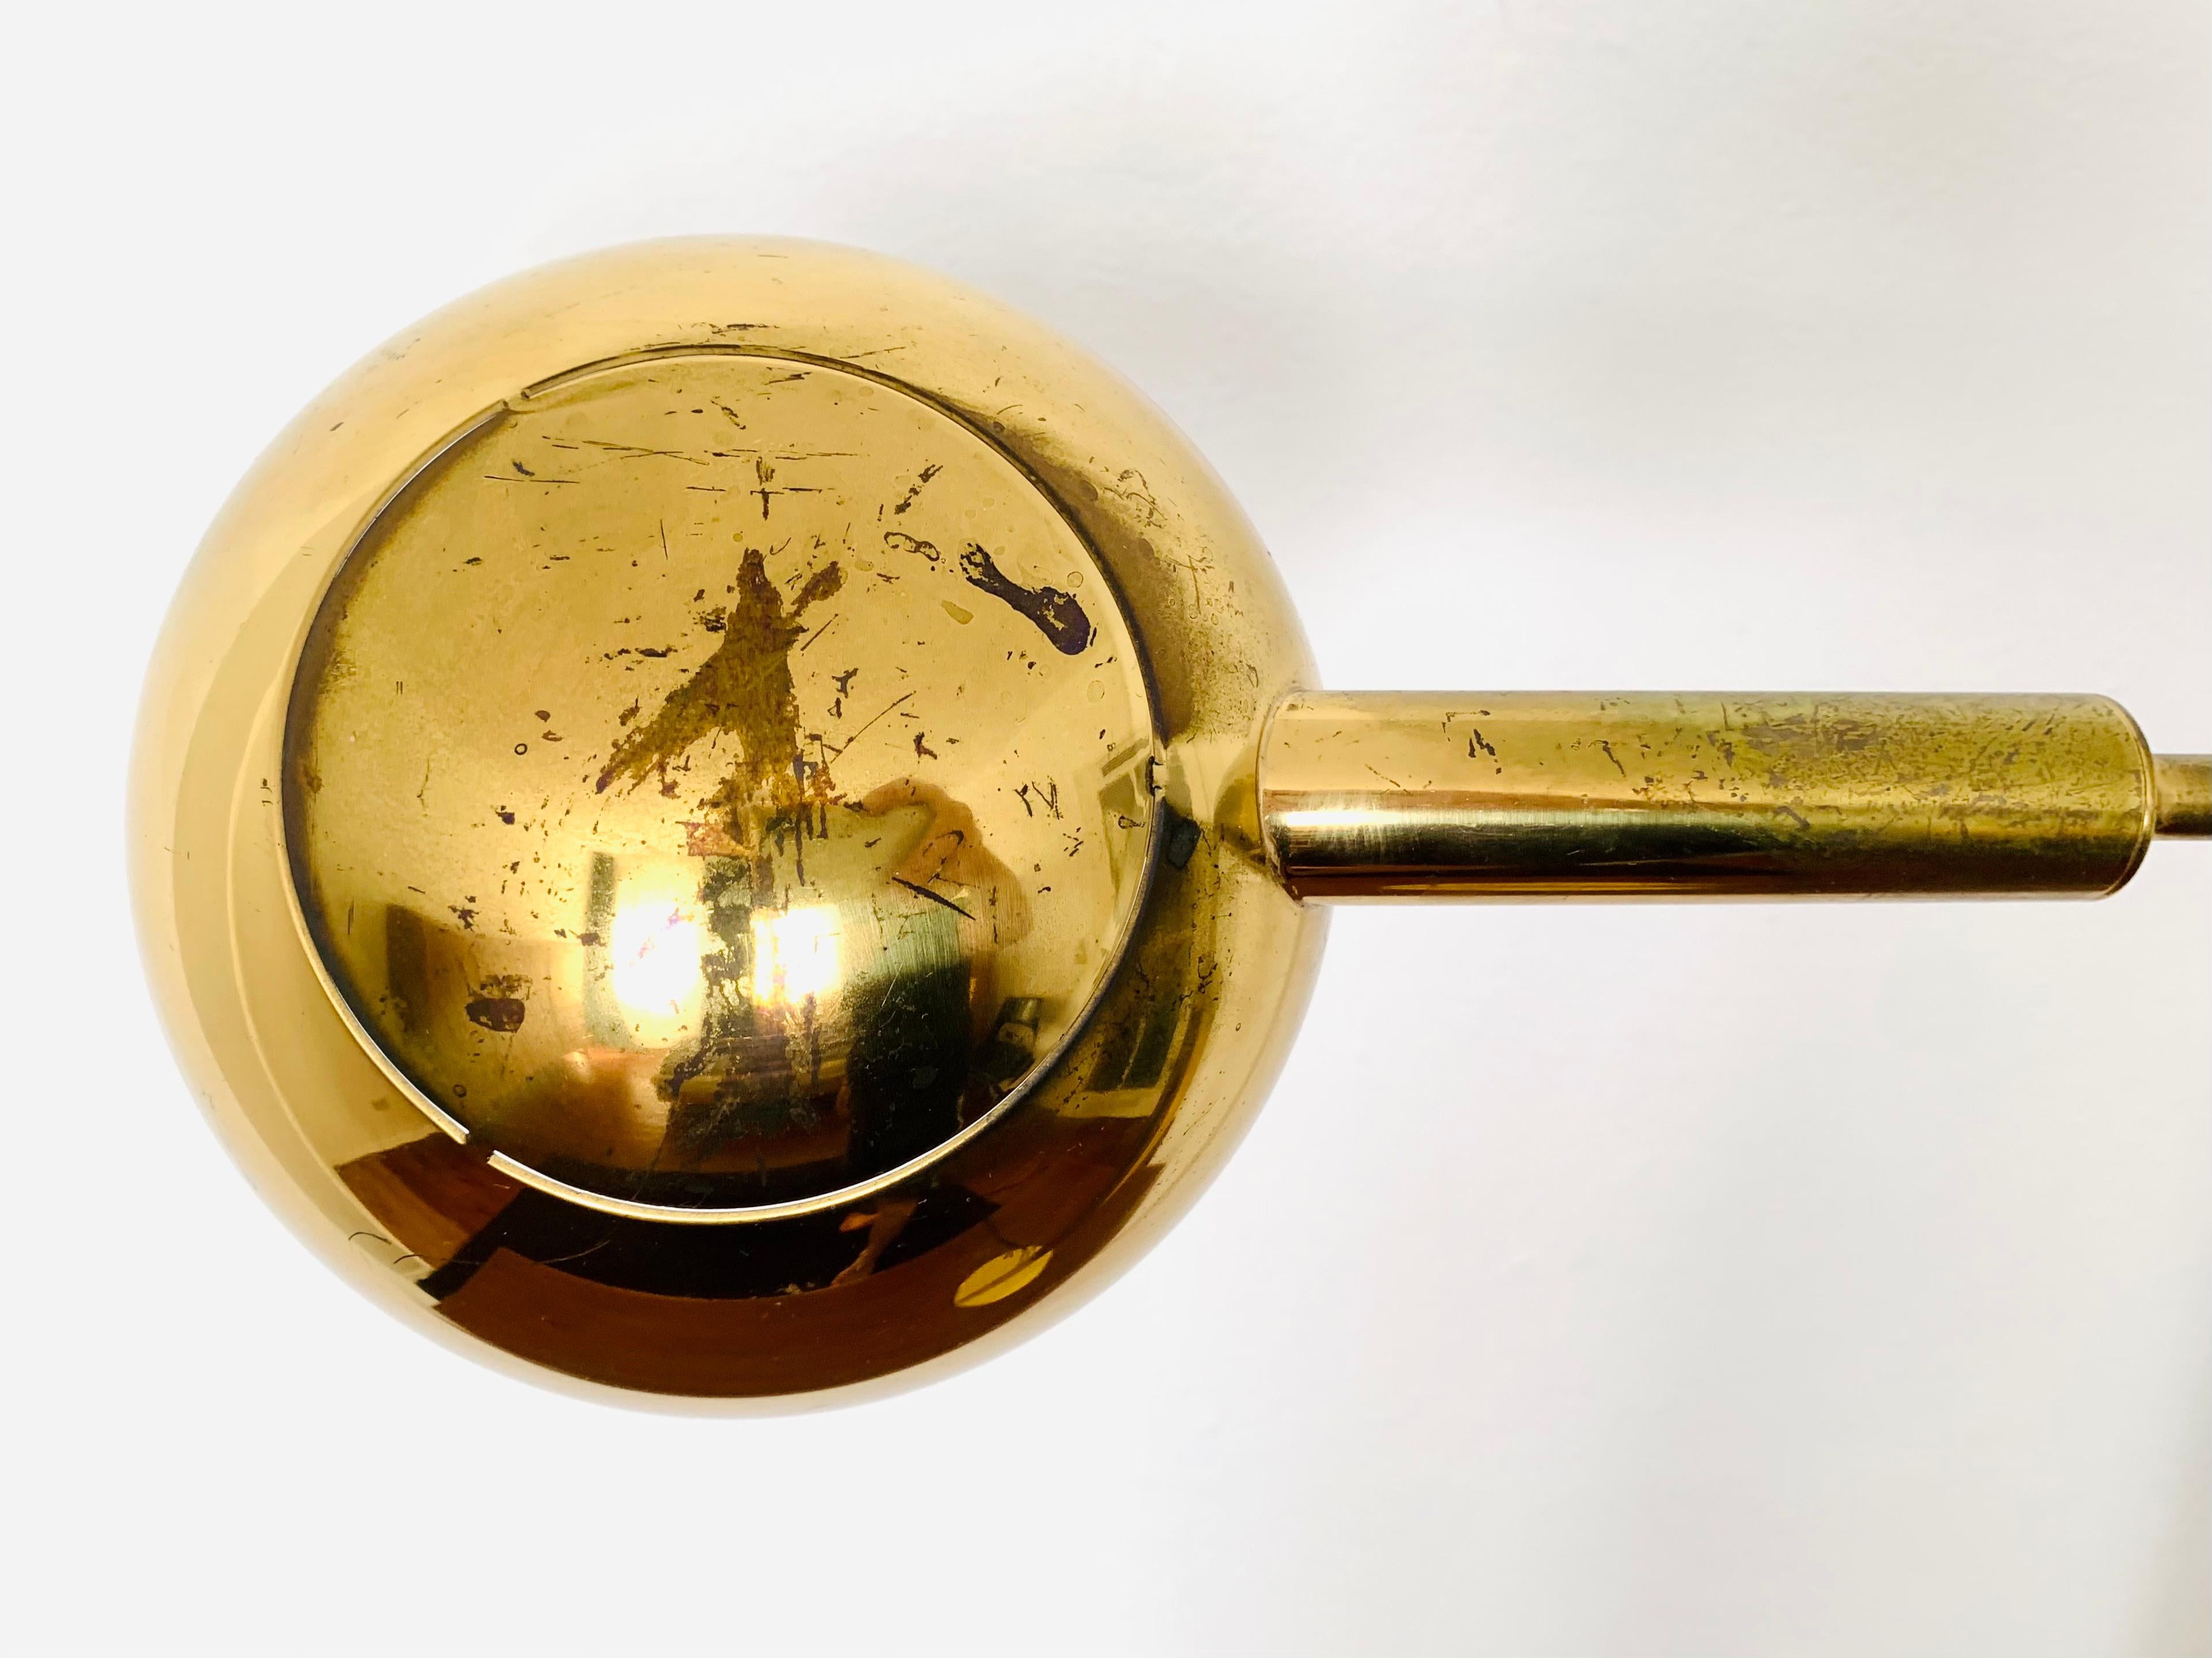 Brass Floor Lamp by Florian Schulz For Sale 4